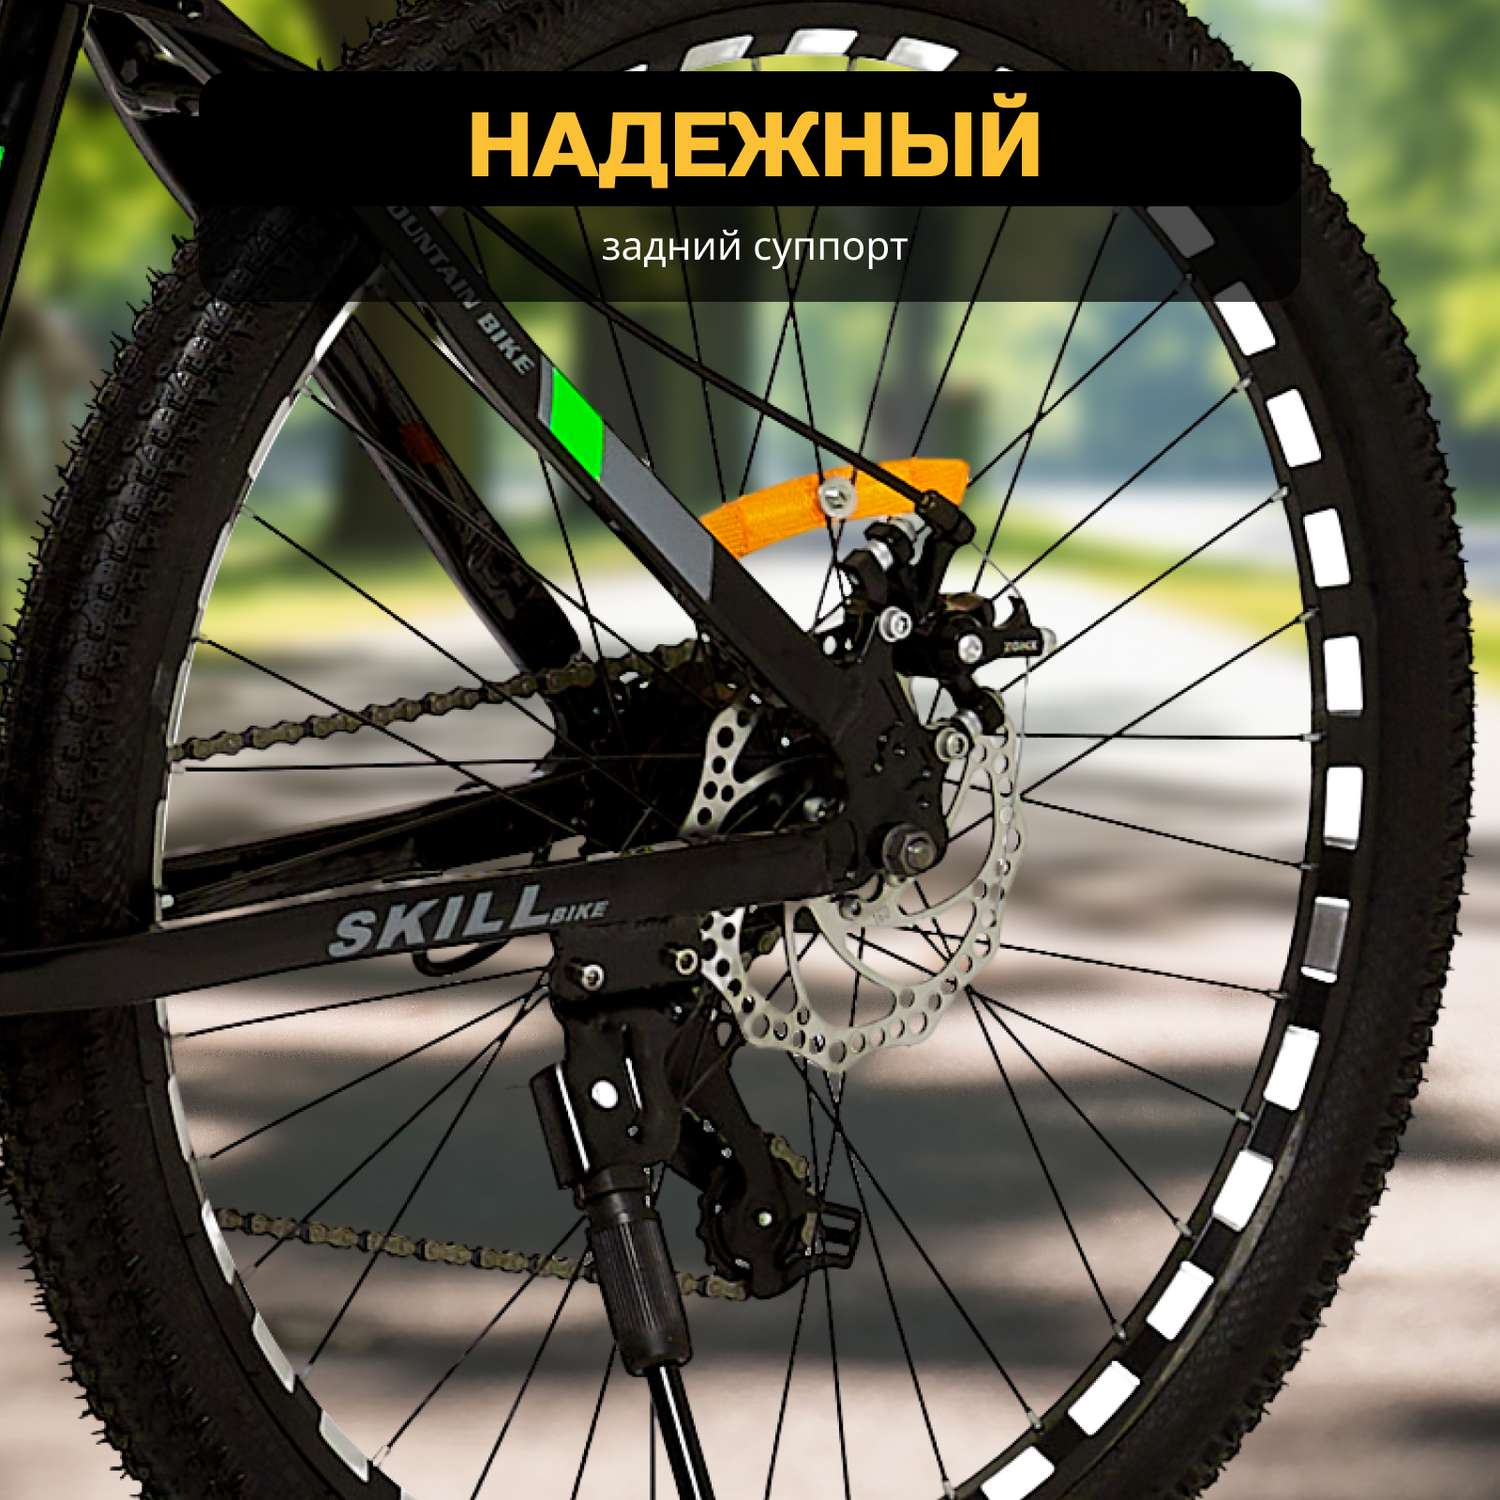 Велосипед Skill Bike black green 3063 - фото 10